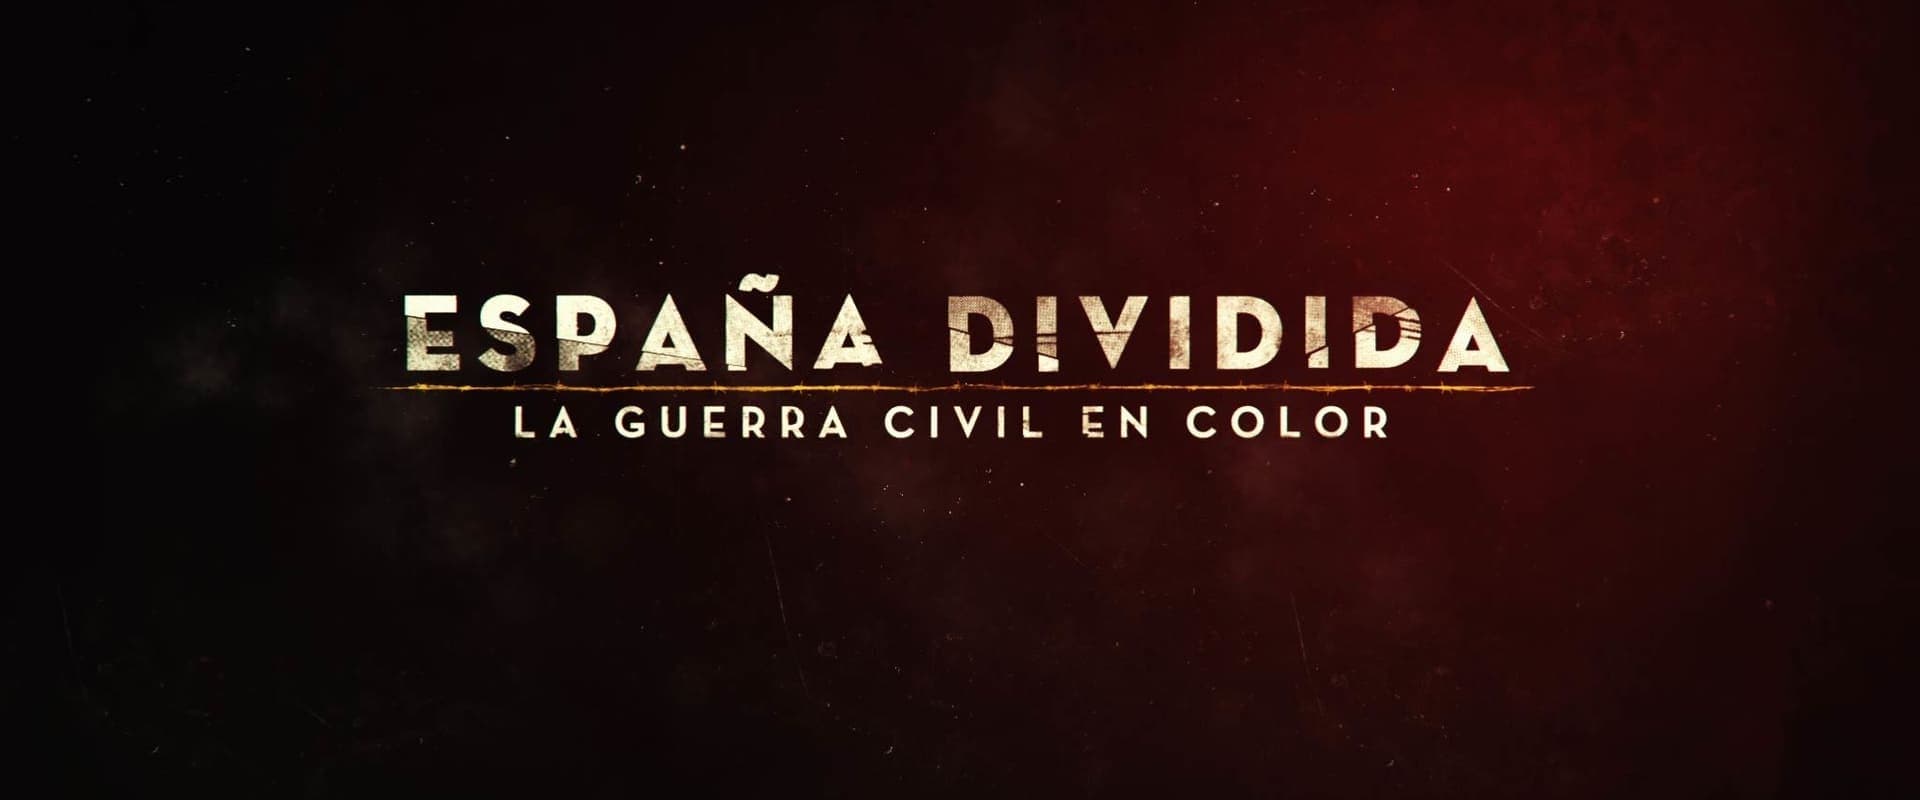 España dividida: La Guerra Civil en color